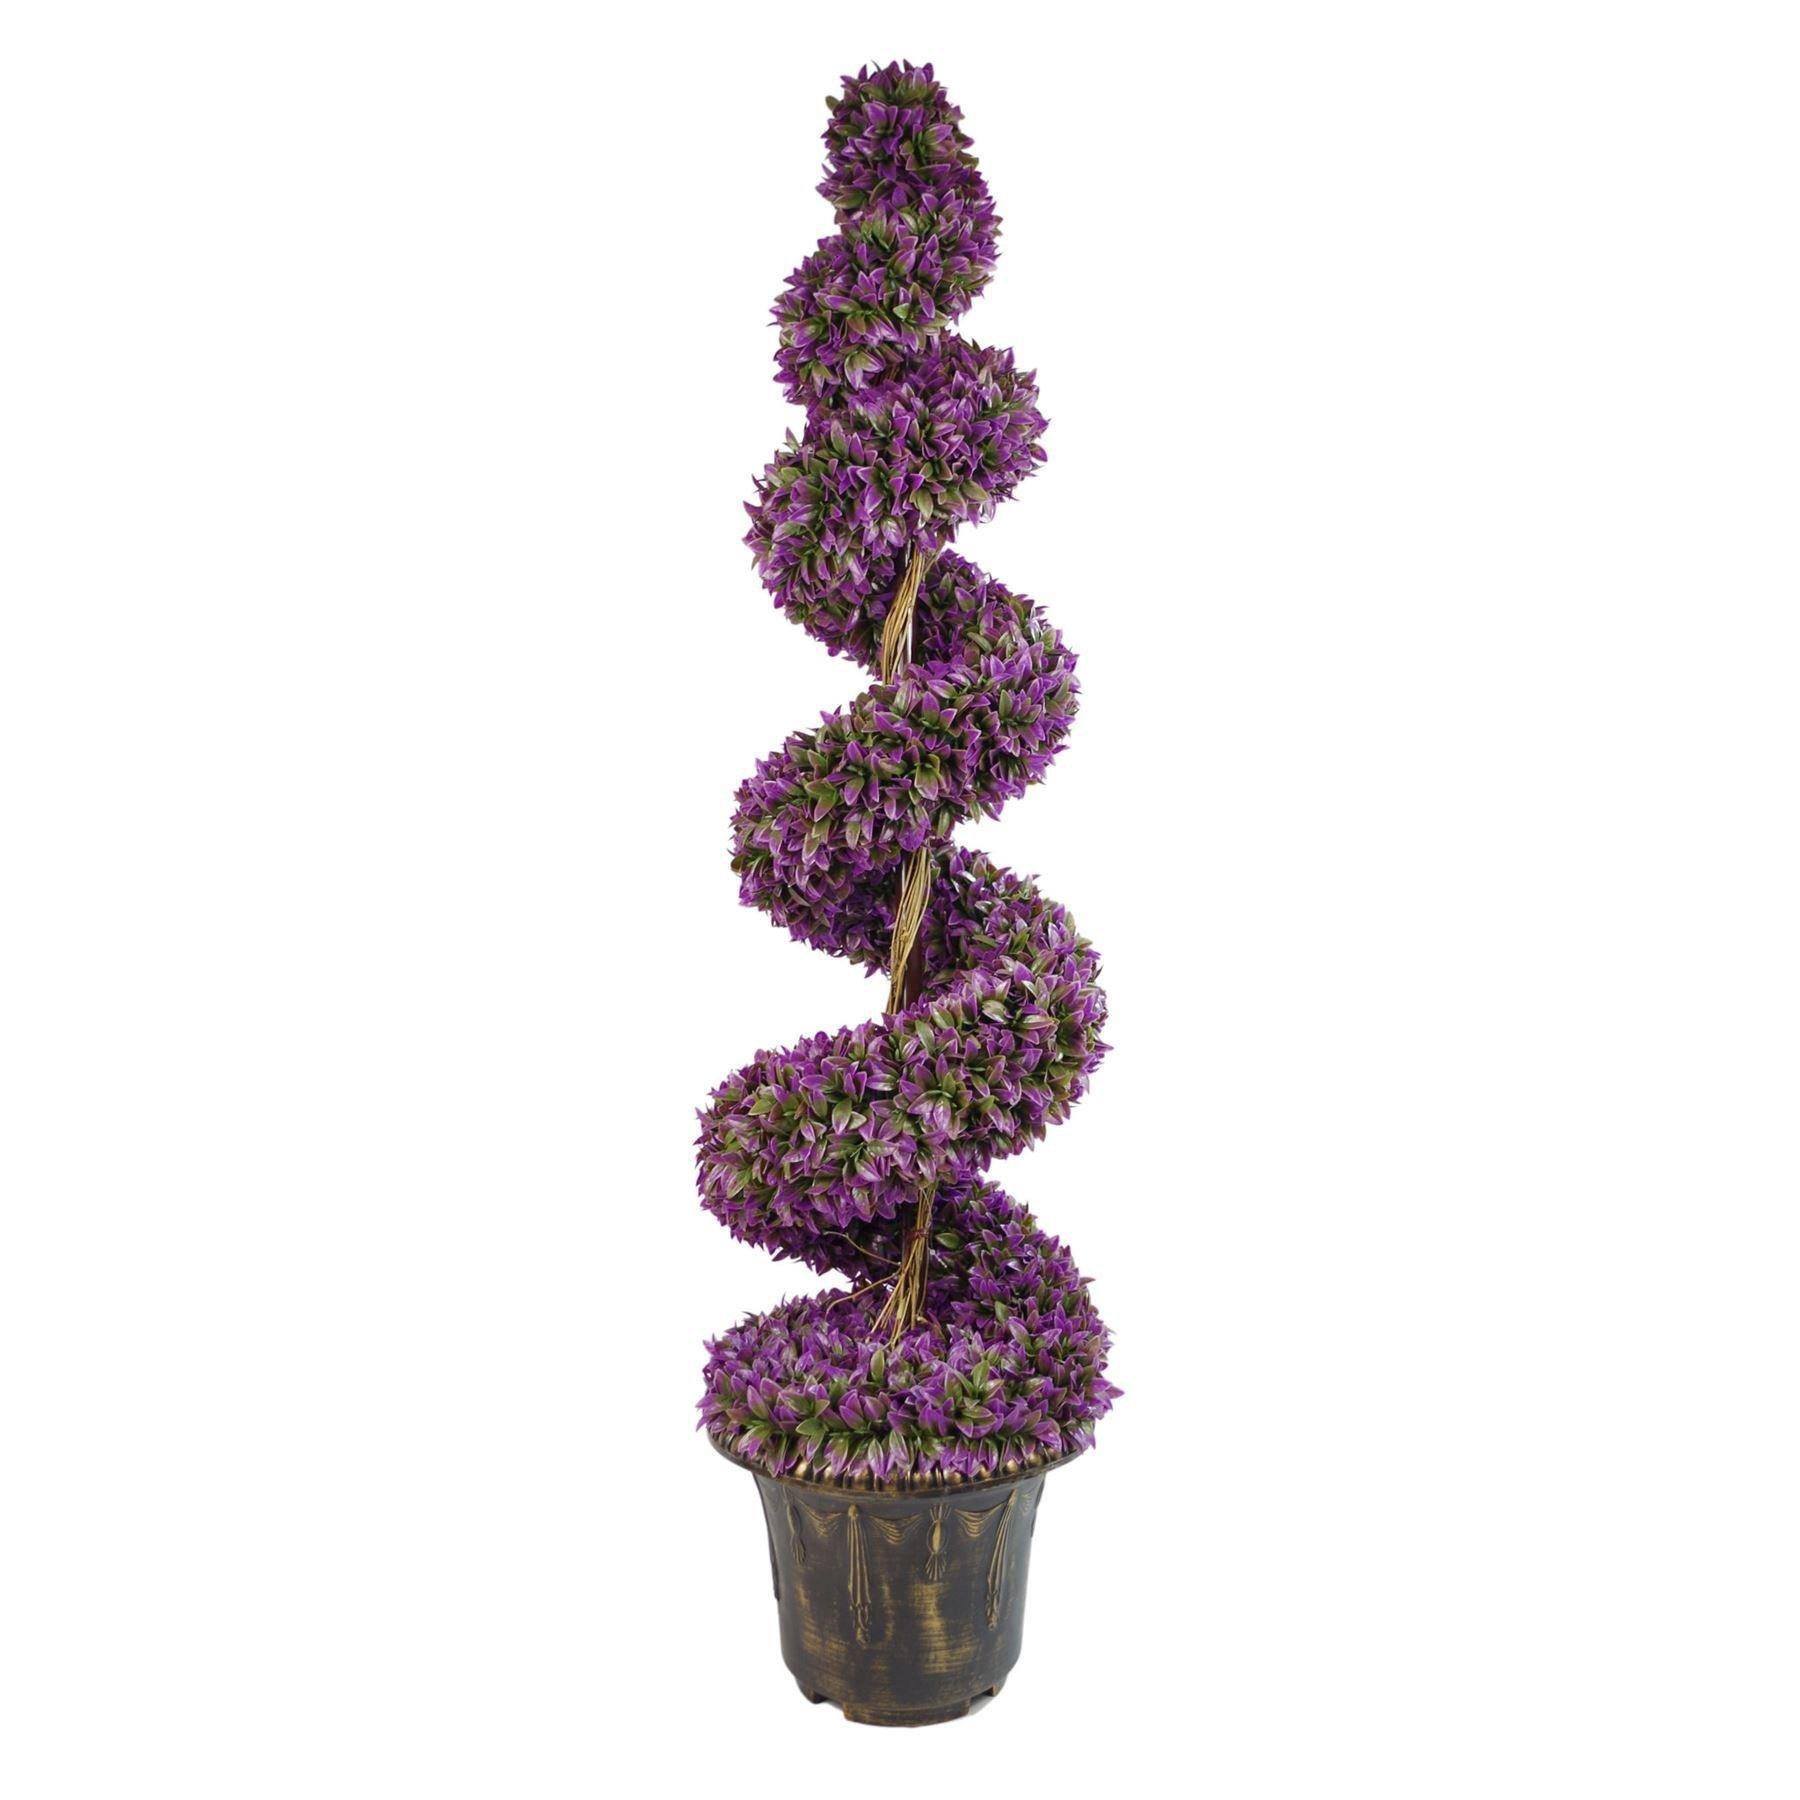 120cm Purple Large Leaf Spiral with Decorative Planter - image 1